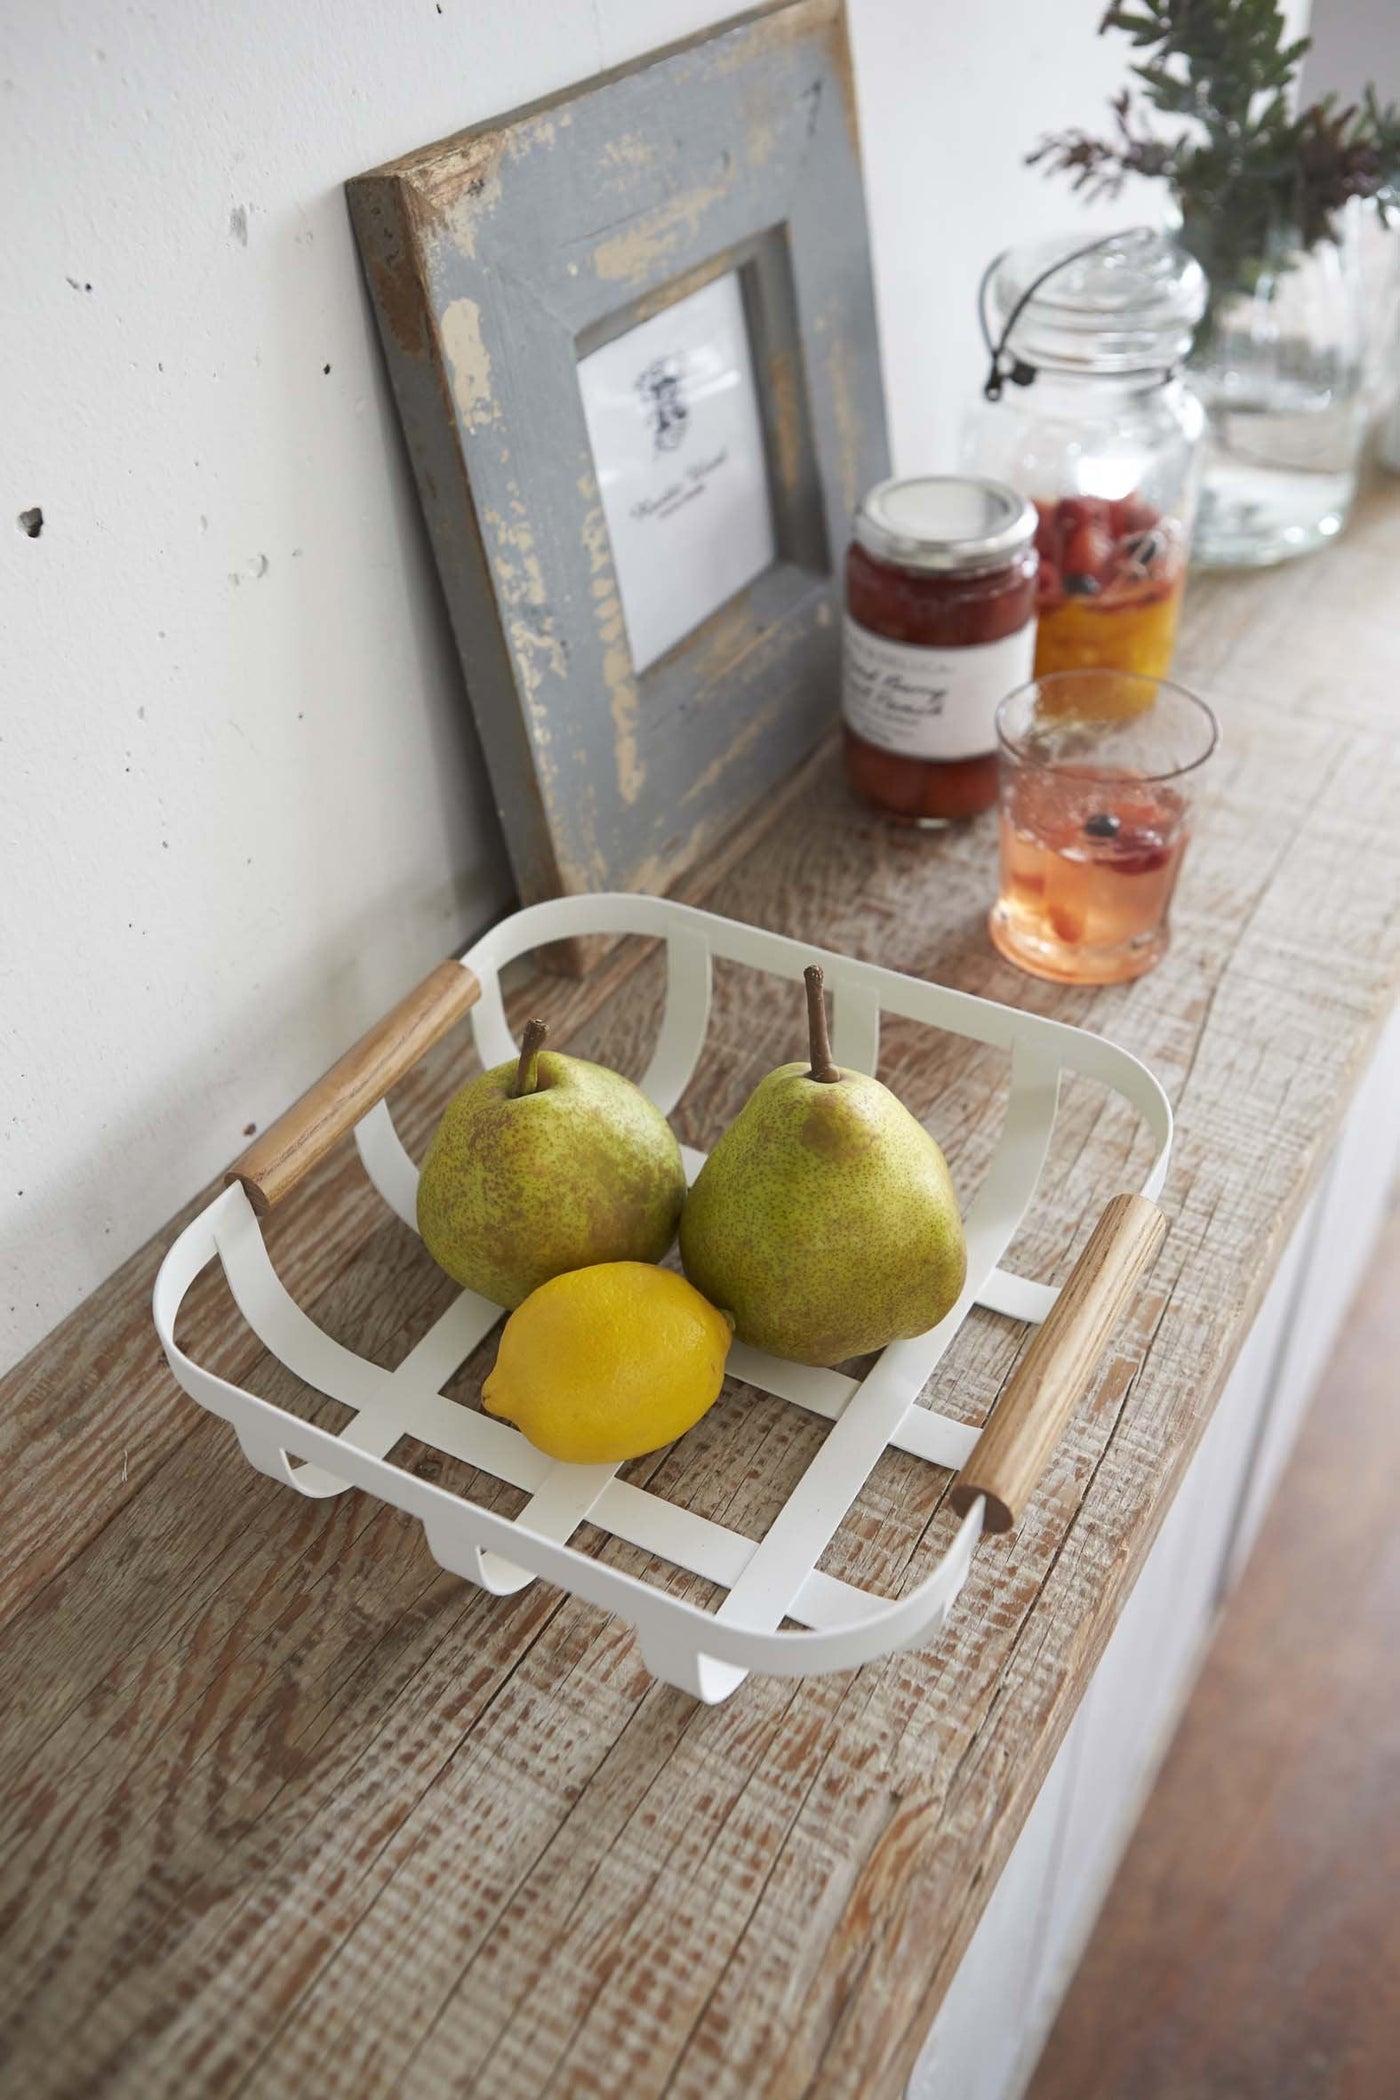 White basket by Yamazaki holding fruit on kitchen shelf